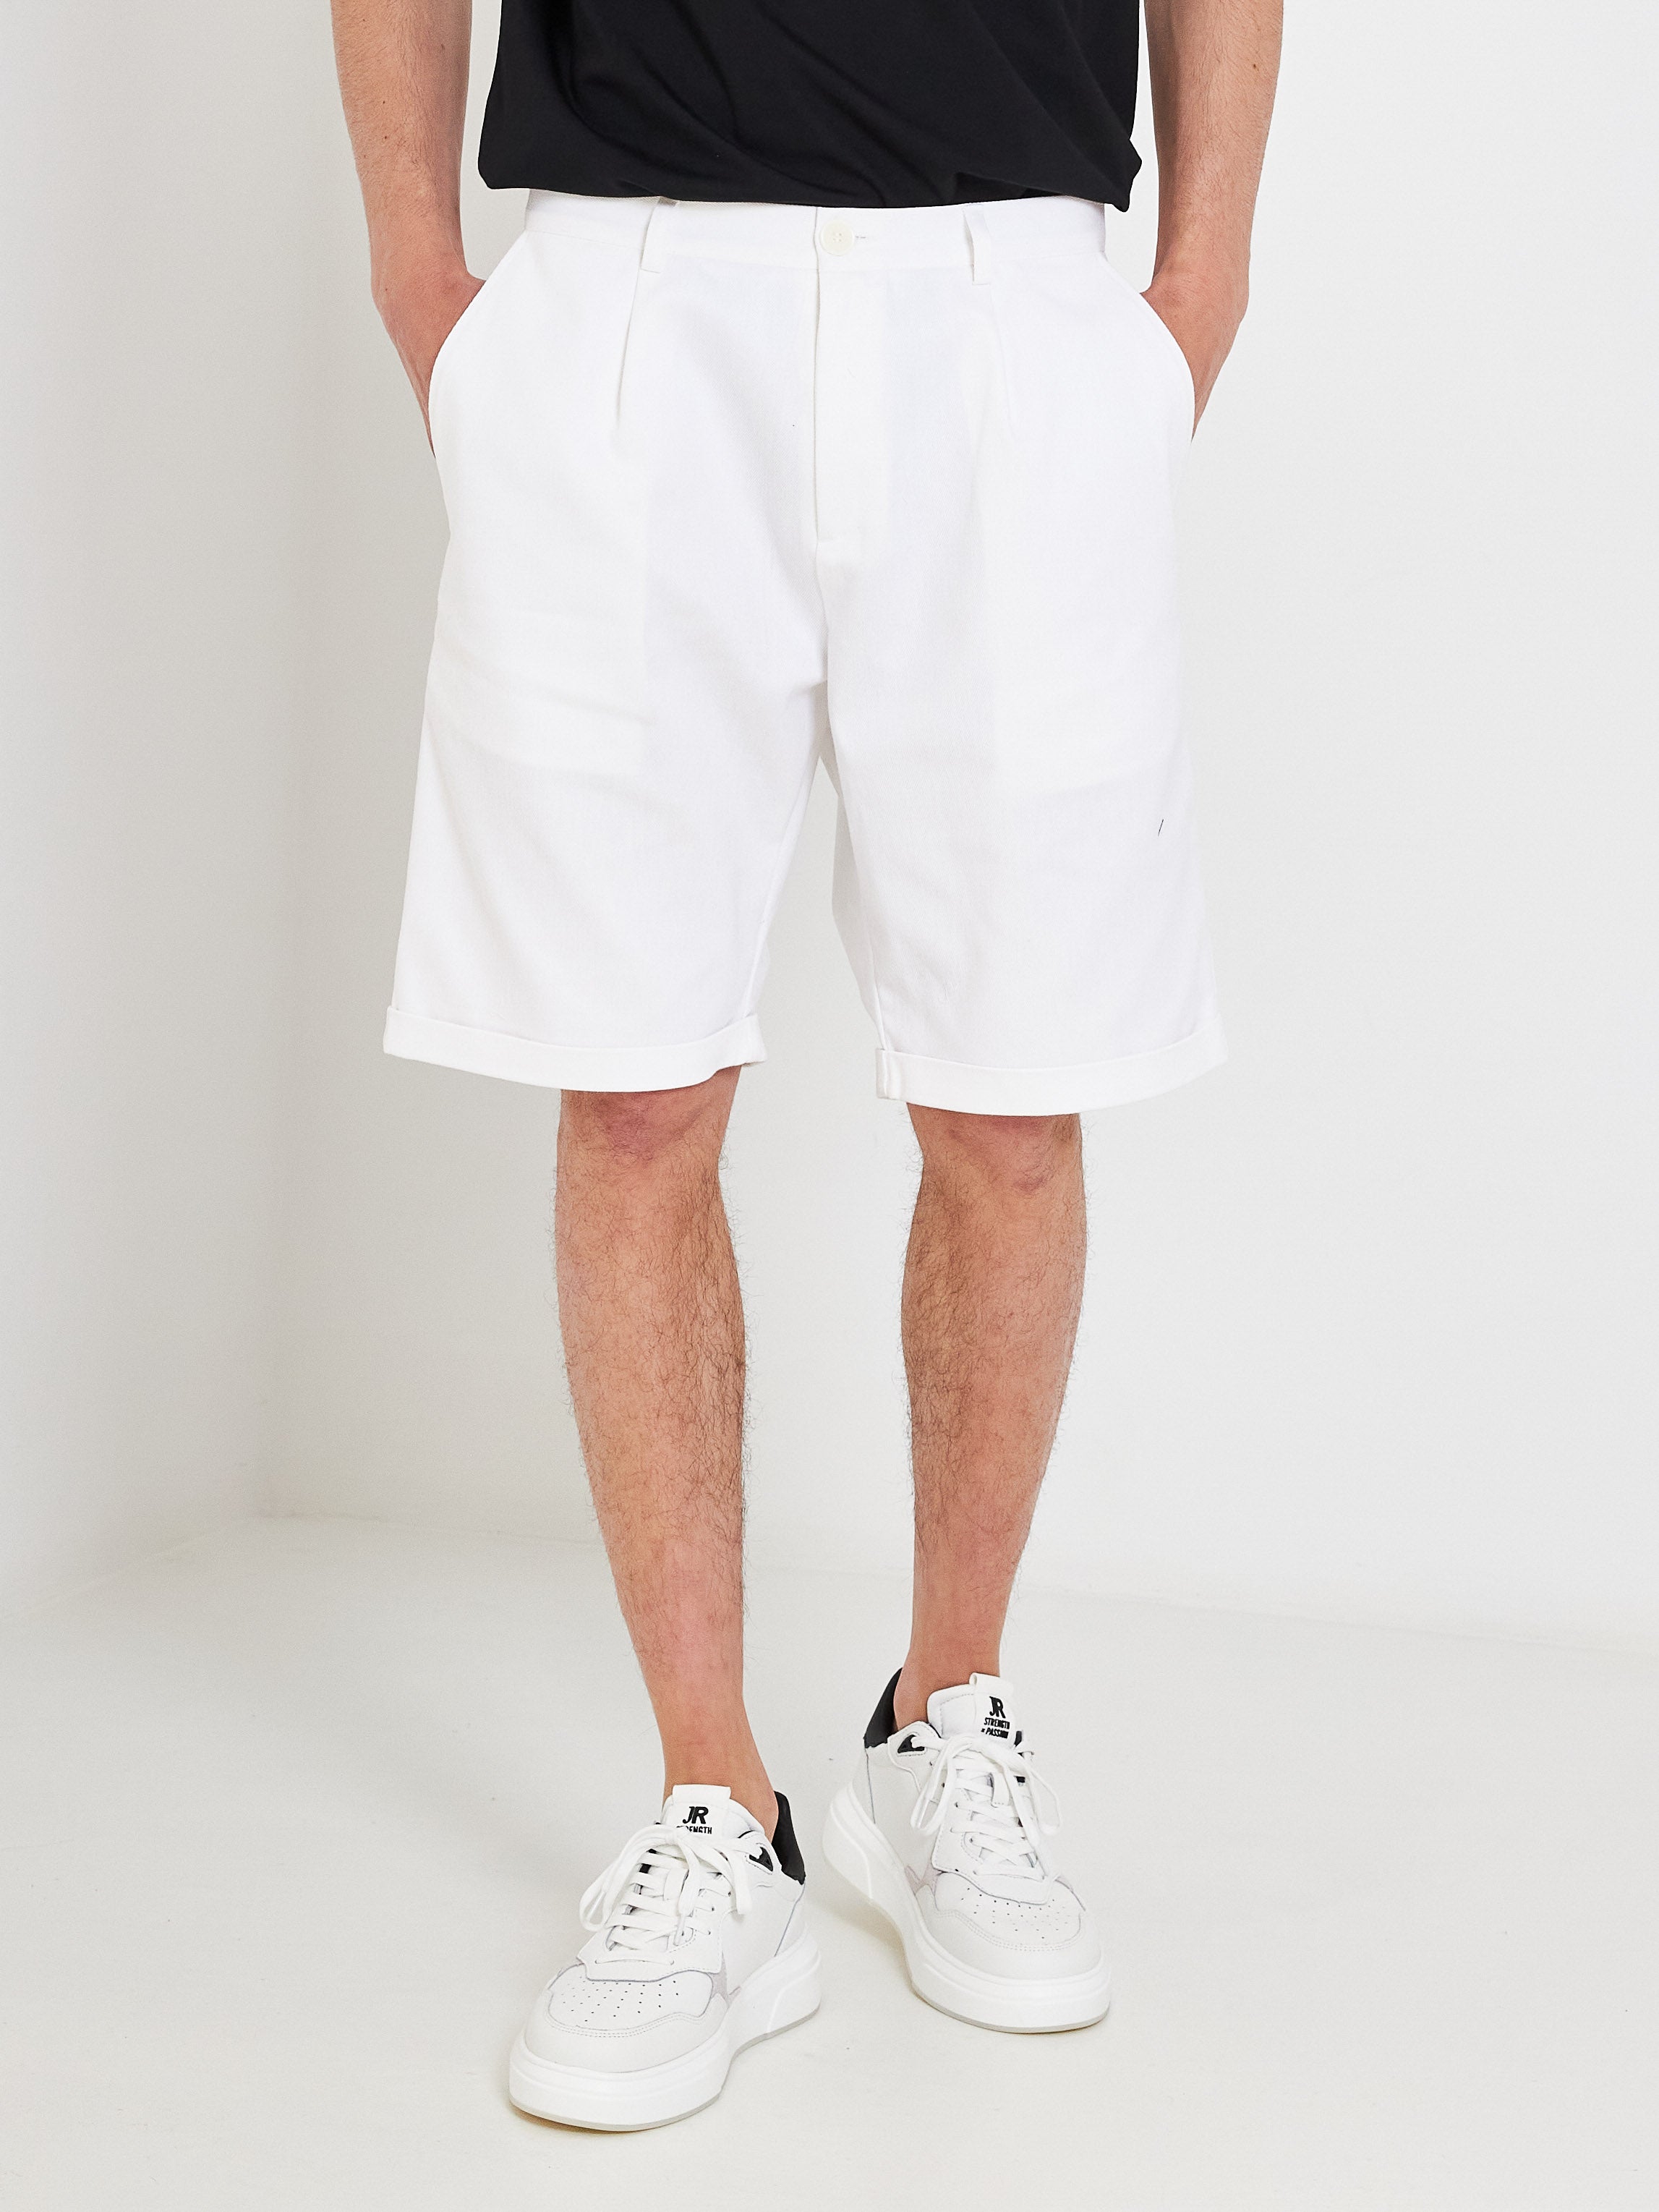 Mood One white bermuda shorts